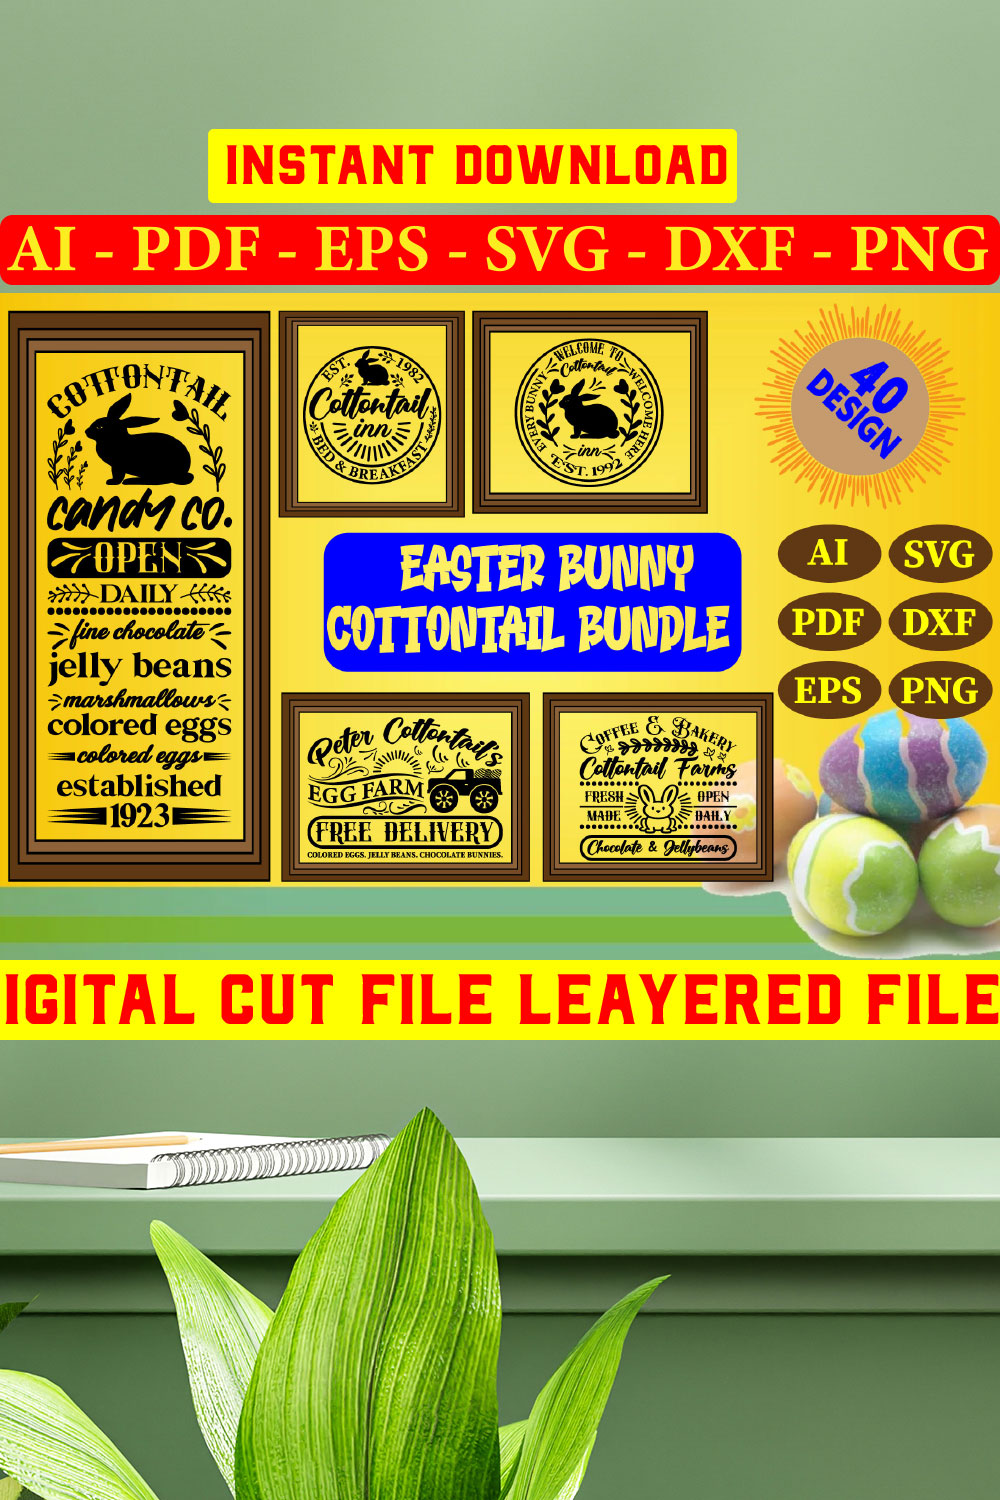 Easter Bunny Cottontail Bundle SVG 40 Designs Vol-06 pinterest preview image.